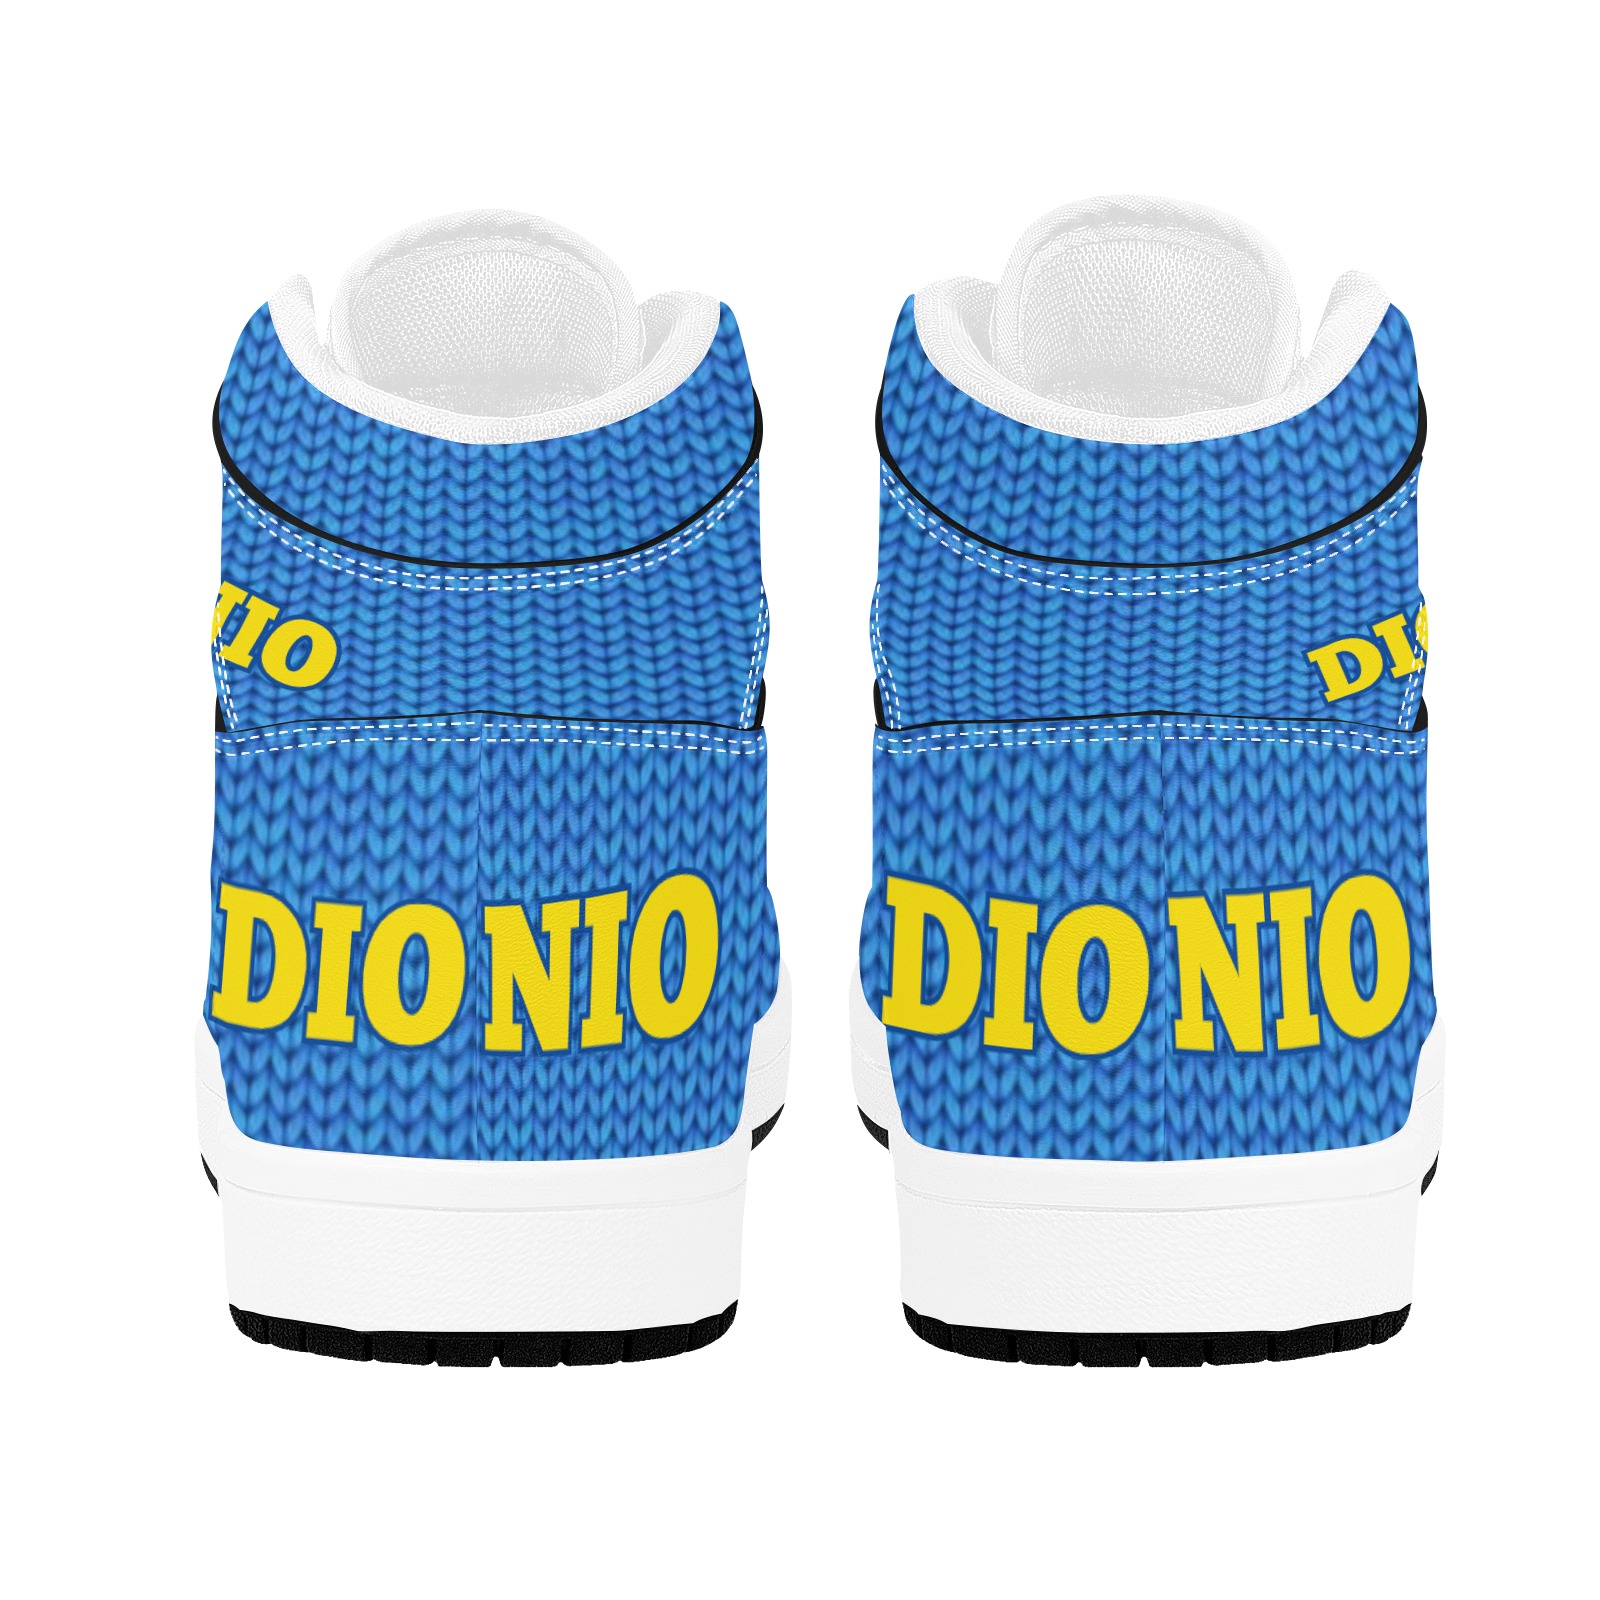 DIONIO - Kraze  Basketball Sneakers Men's High Top Sneakers (Model 20042)